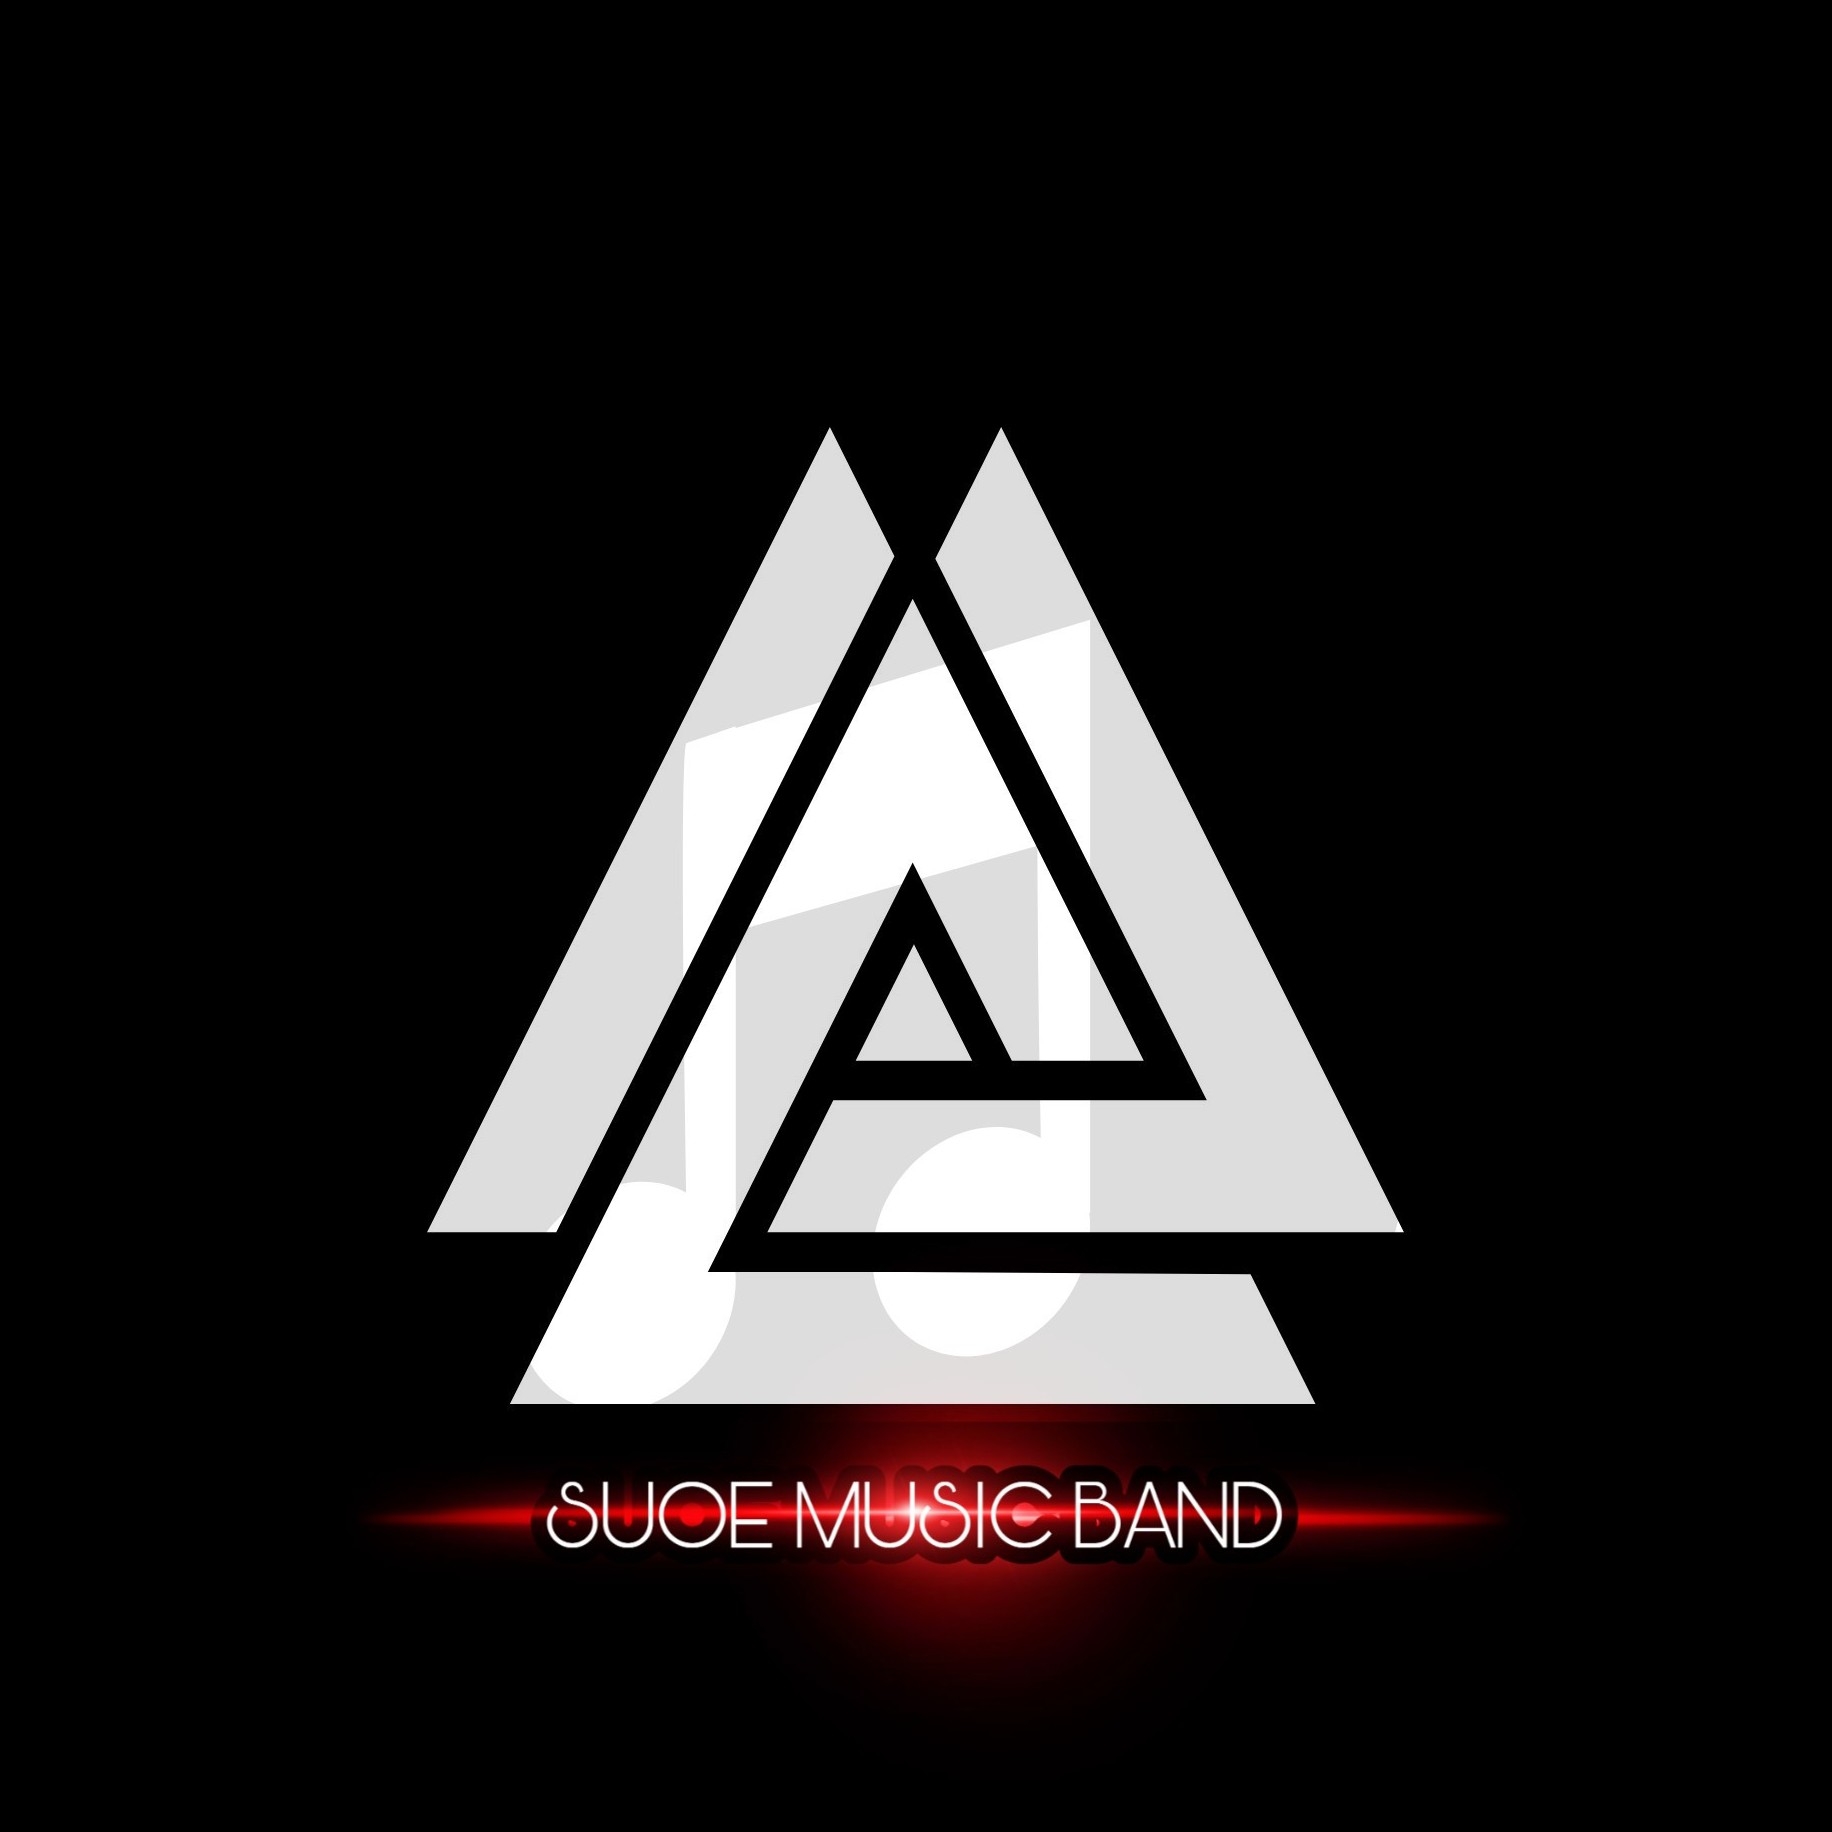 SUOE Music Band logo